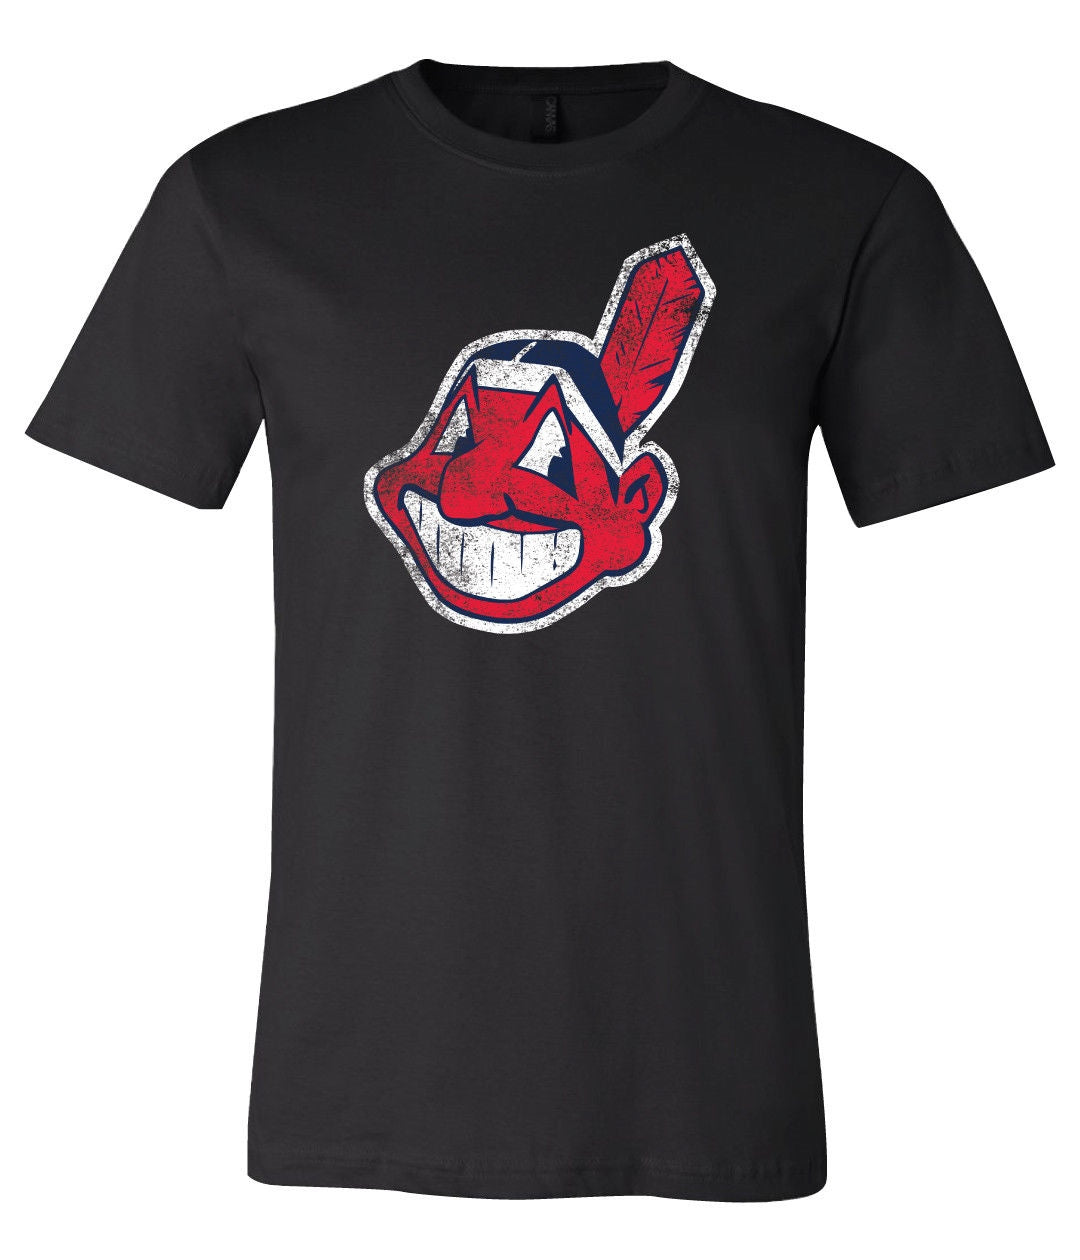 Vintage 1991 Cleveland Indians T-Shirt XLarge